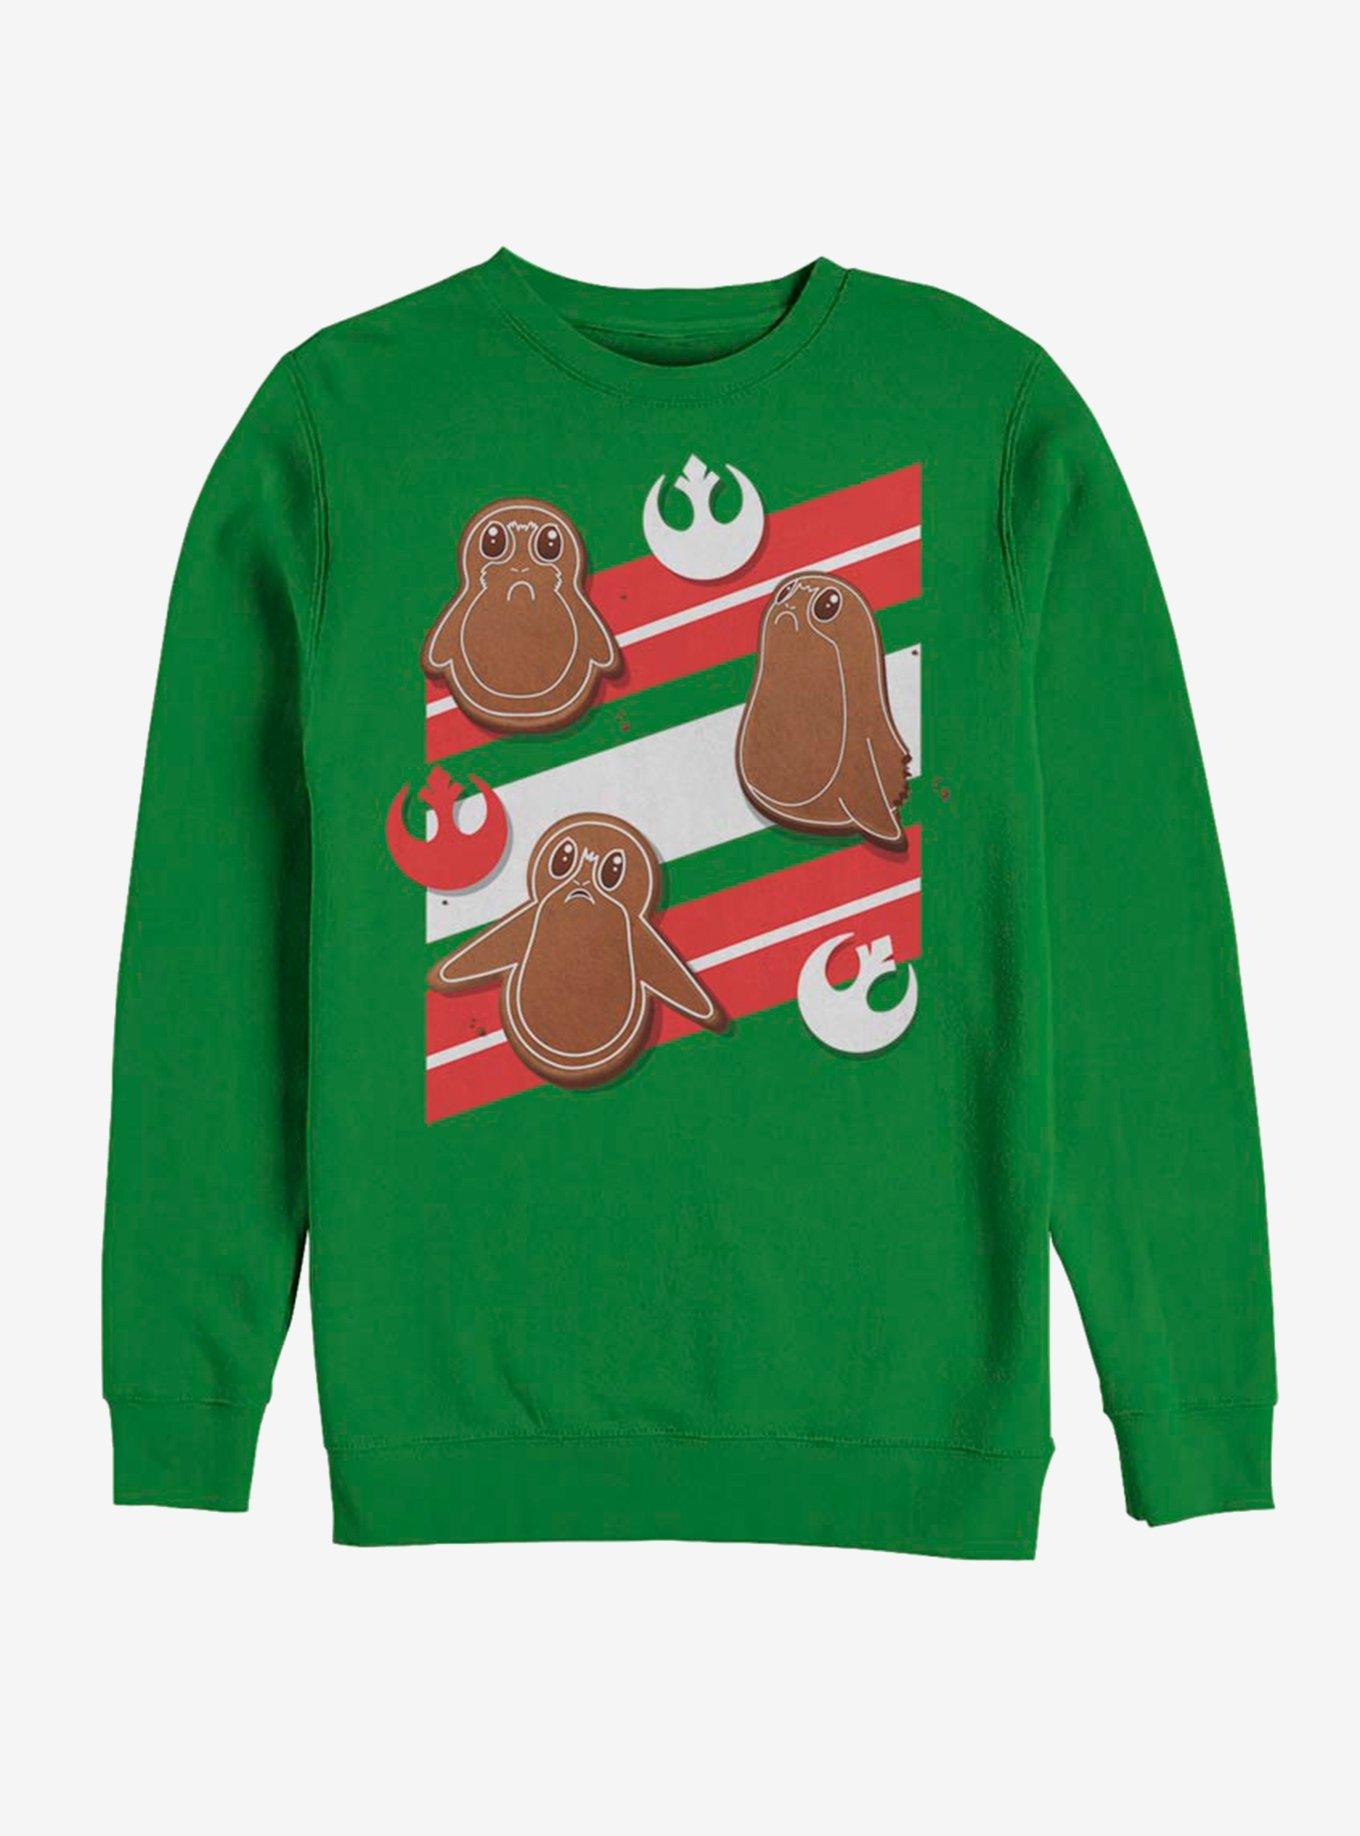 Star Wars Ginger Porgs Sweatshirt, KELLY, hi-res